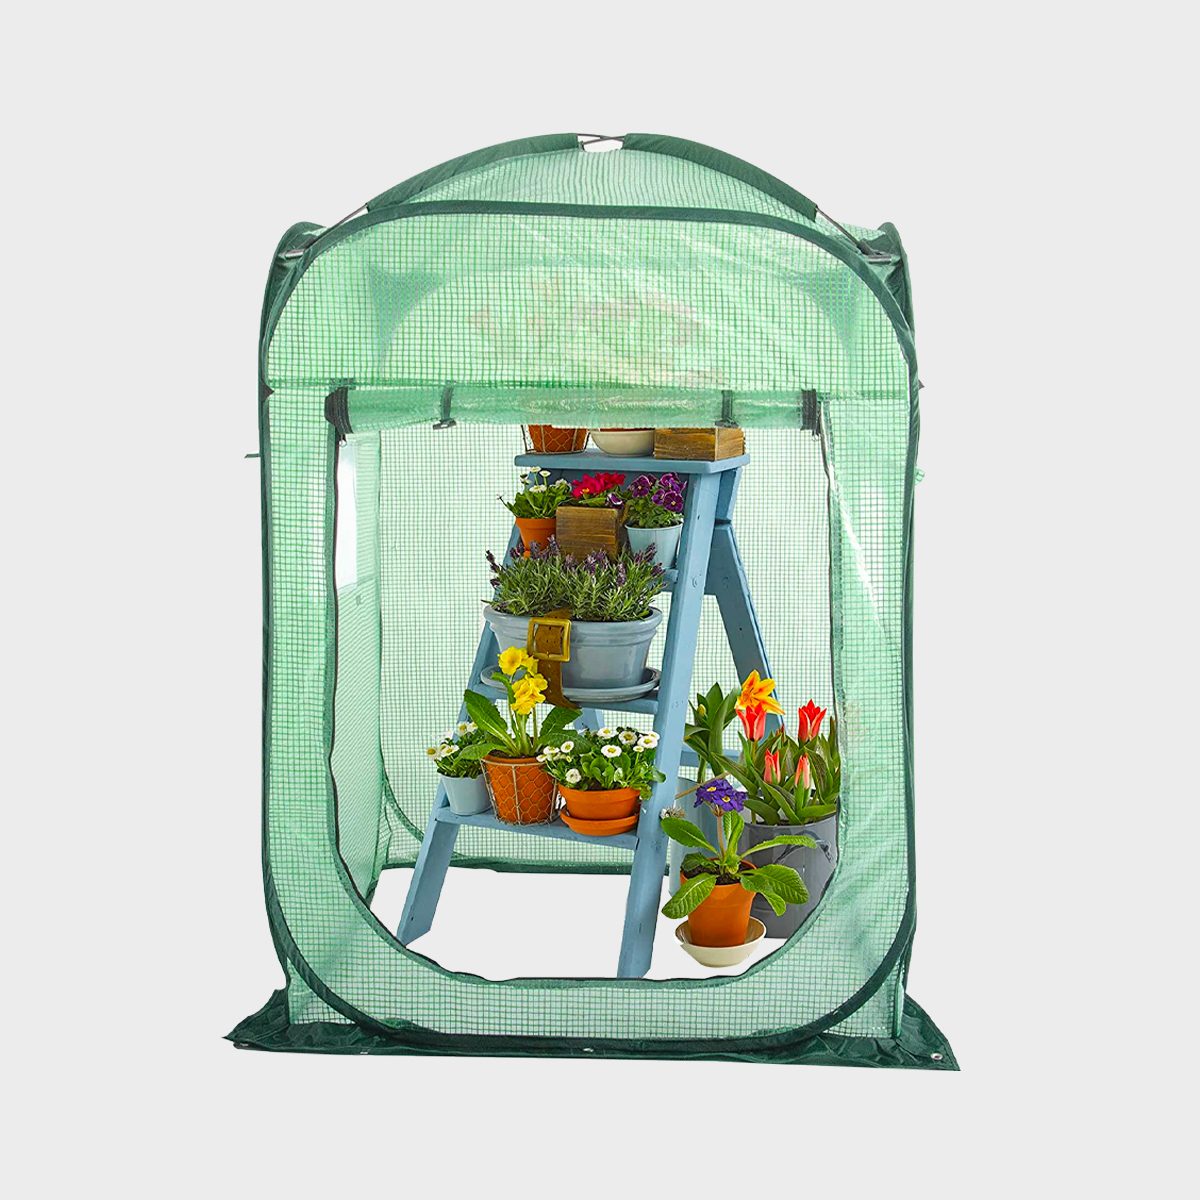 Porayhut Pop Up Greenhouse Tent Ecomm Amazon.com